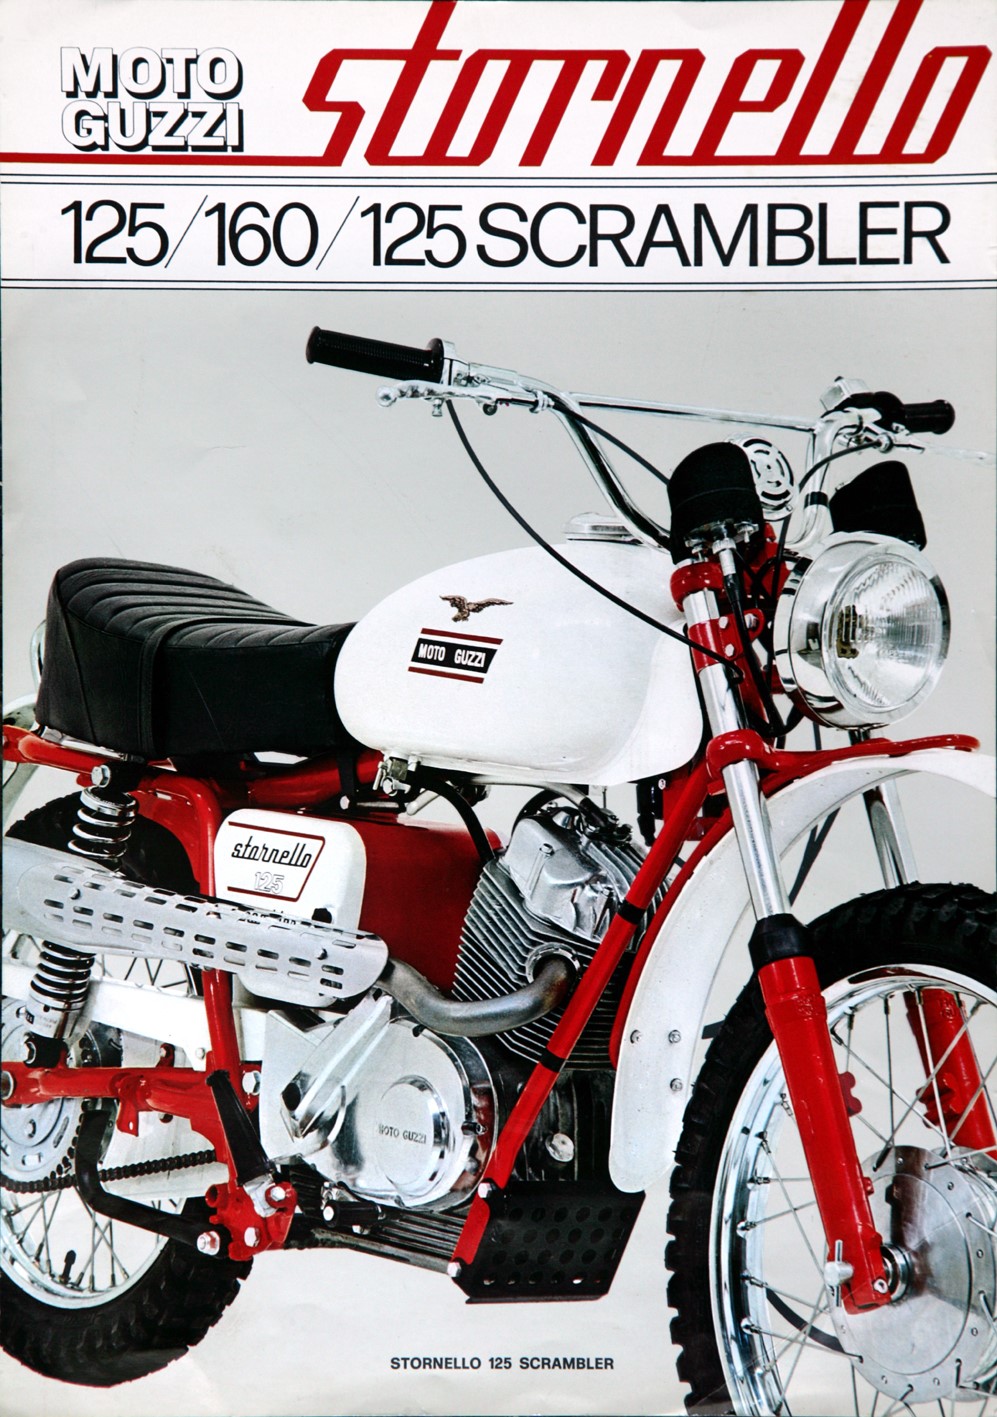 Brochure - Moto Guzzi Stornello 125 / 160 / 125 Scrambler